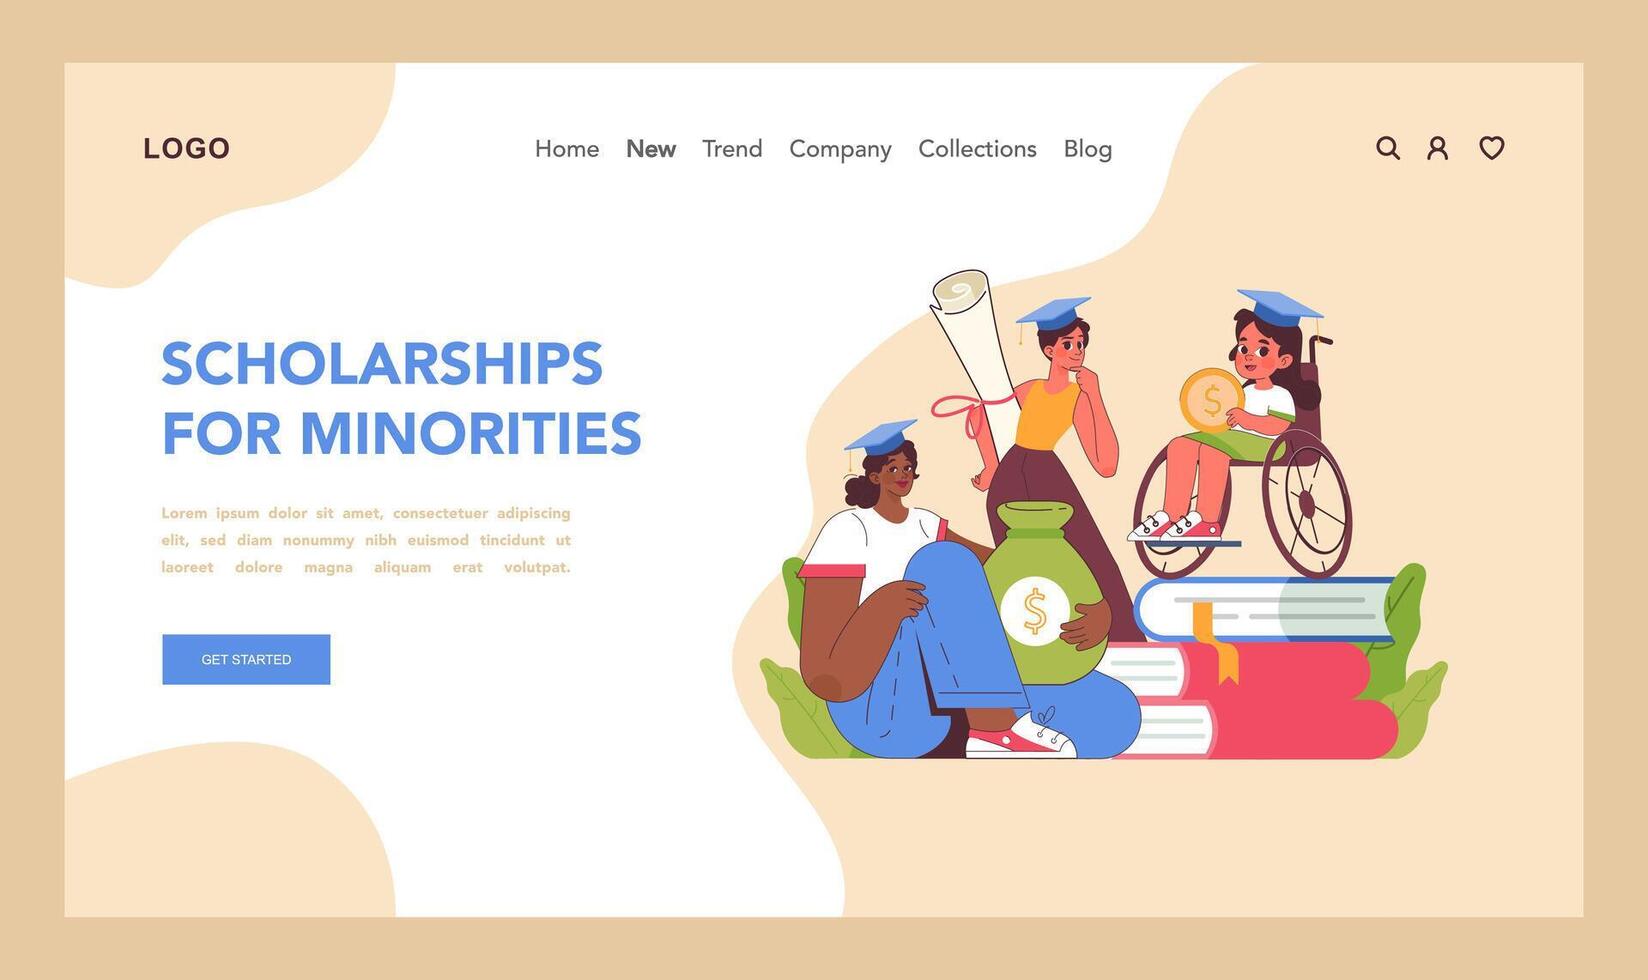 Scholarships for minorities. Flat vector illustration